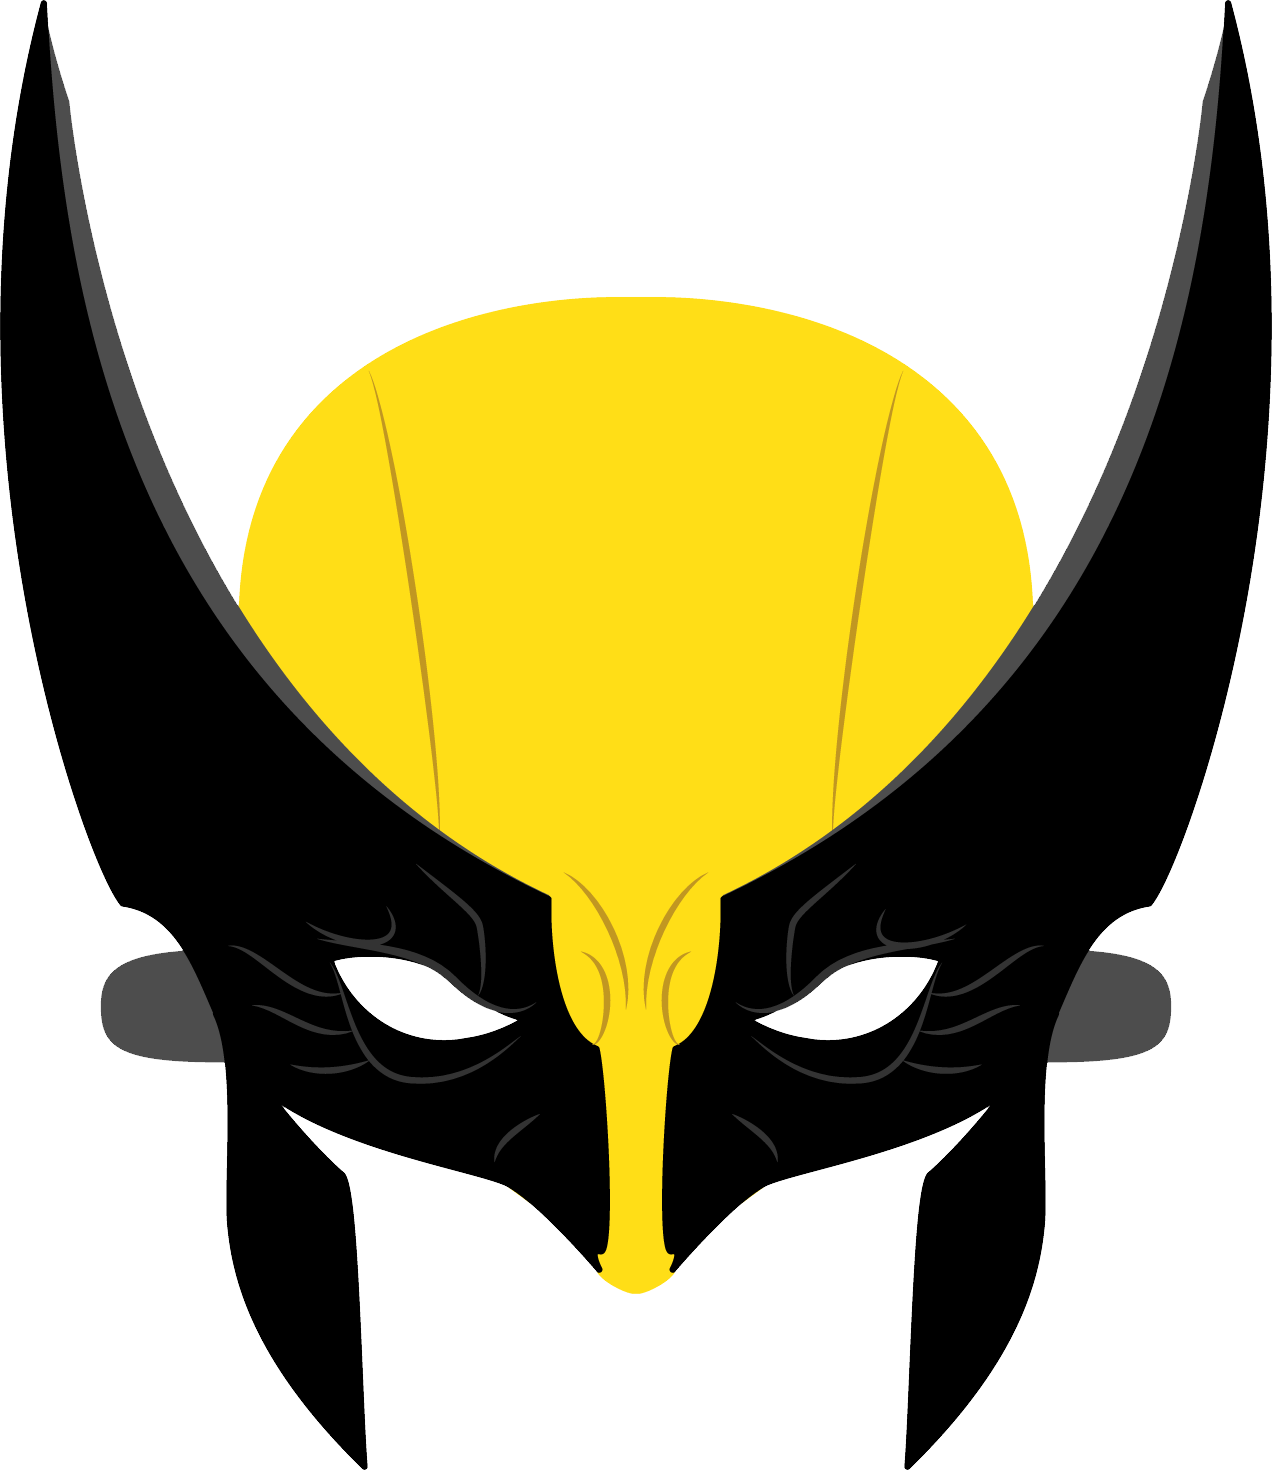 Wolverine mask PNG